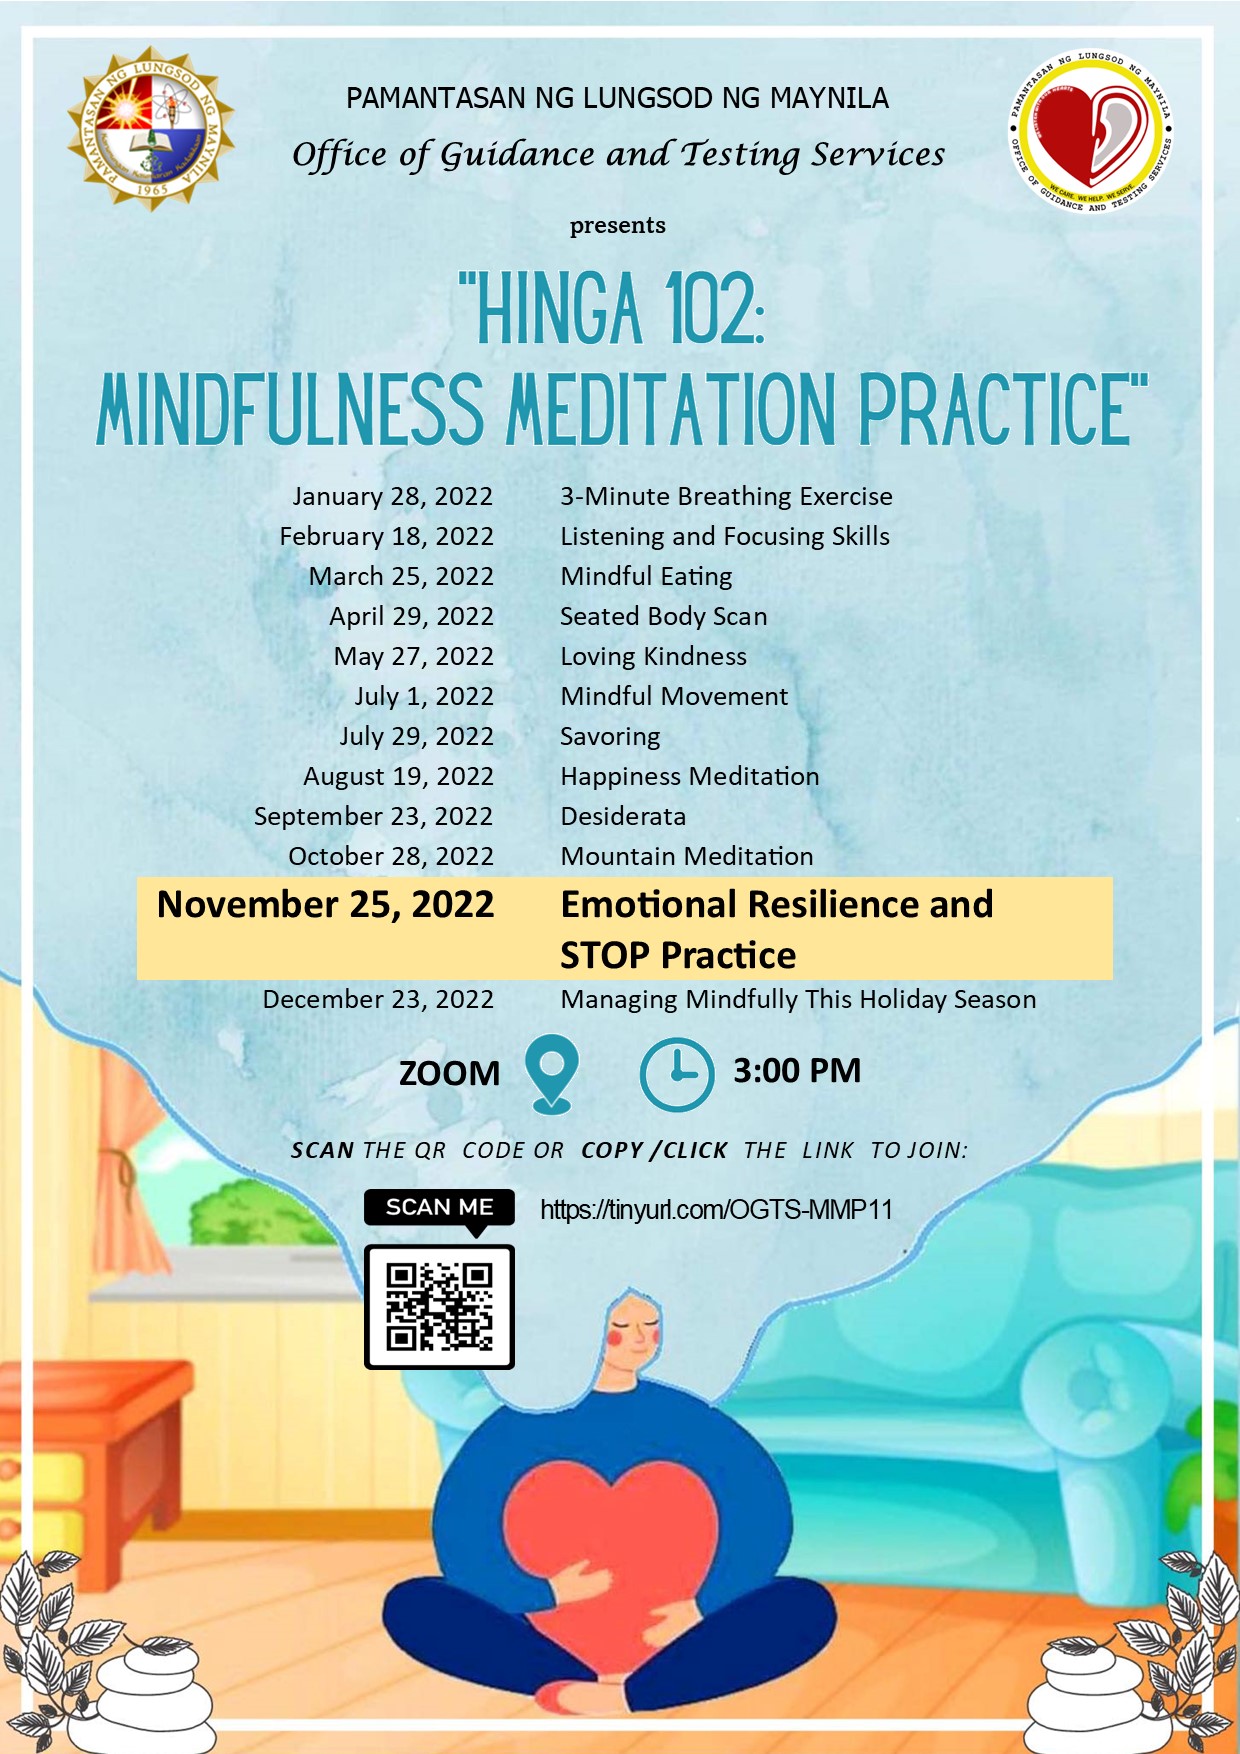 Join Hinga 102's Emotional Resilience, November 25, 3:00PM